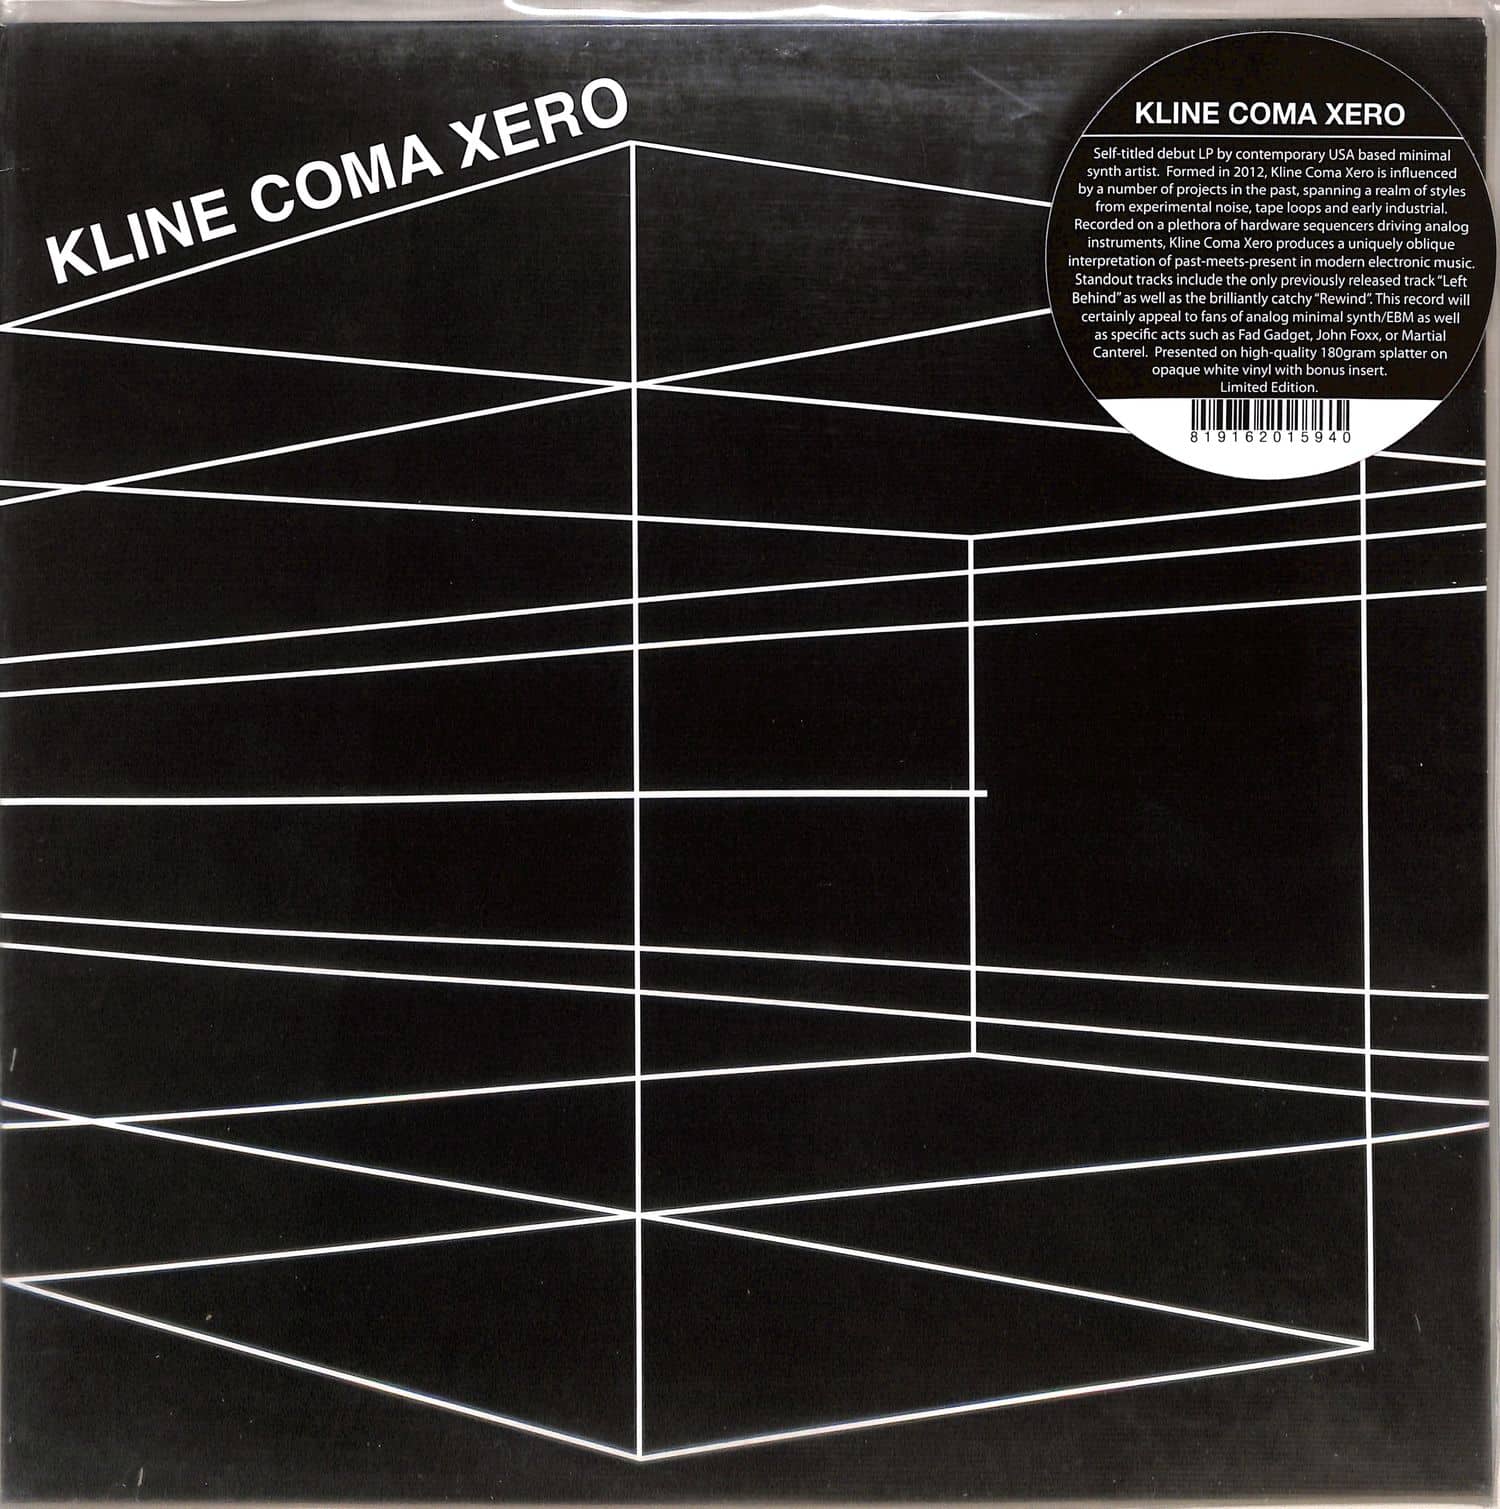 Kline Coma Xero - KLINE COMA XERO 